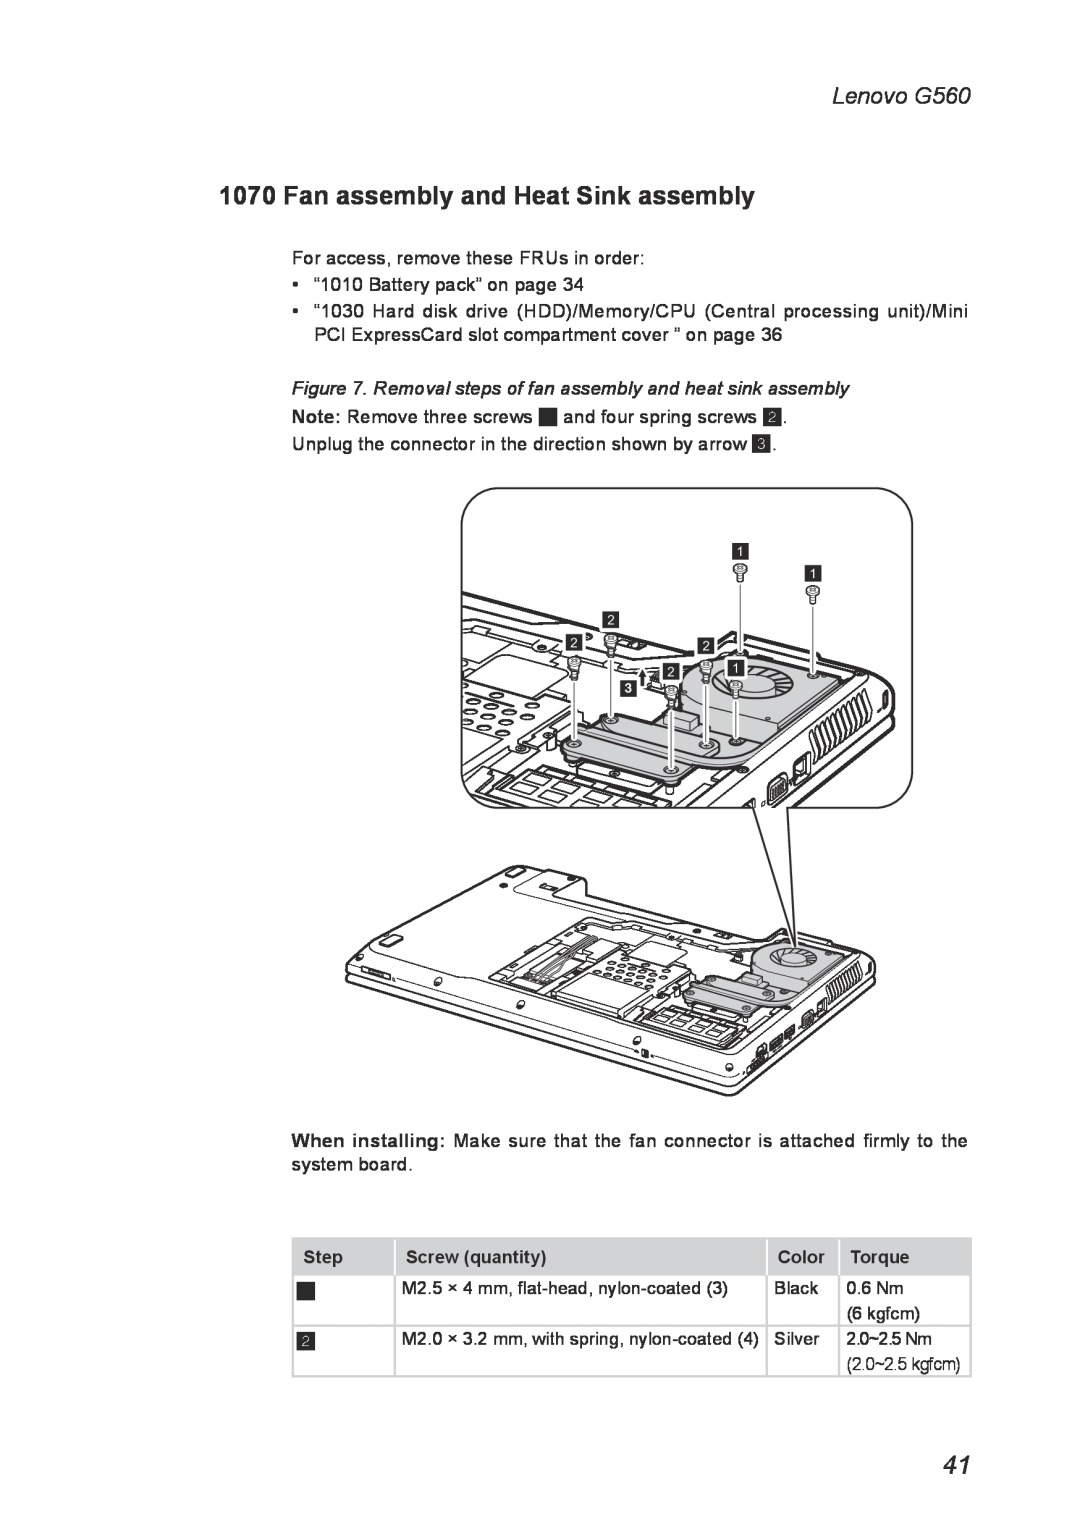 Lenovo manual Fan assembly and Heat Sink assembly, Lenovo G560, Removal steps of fan assembly and heat sink assembly 